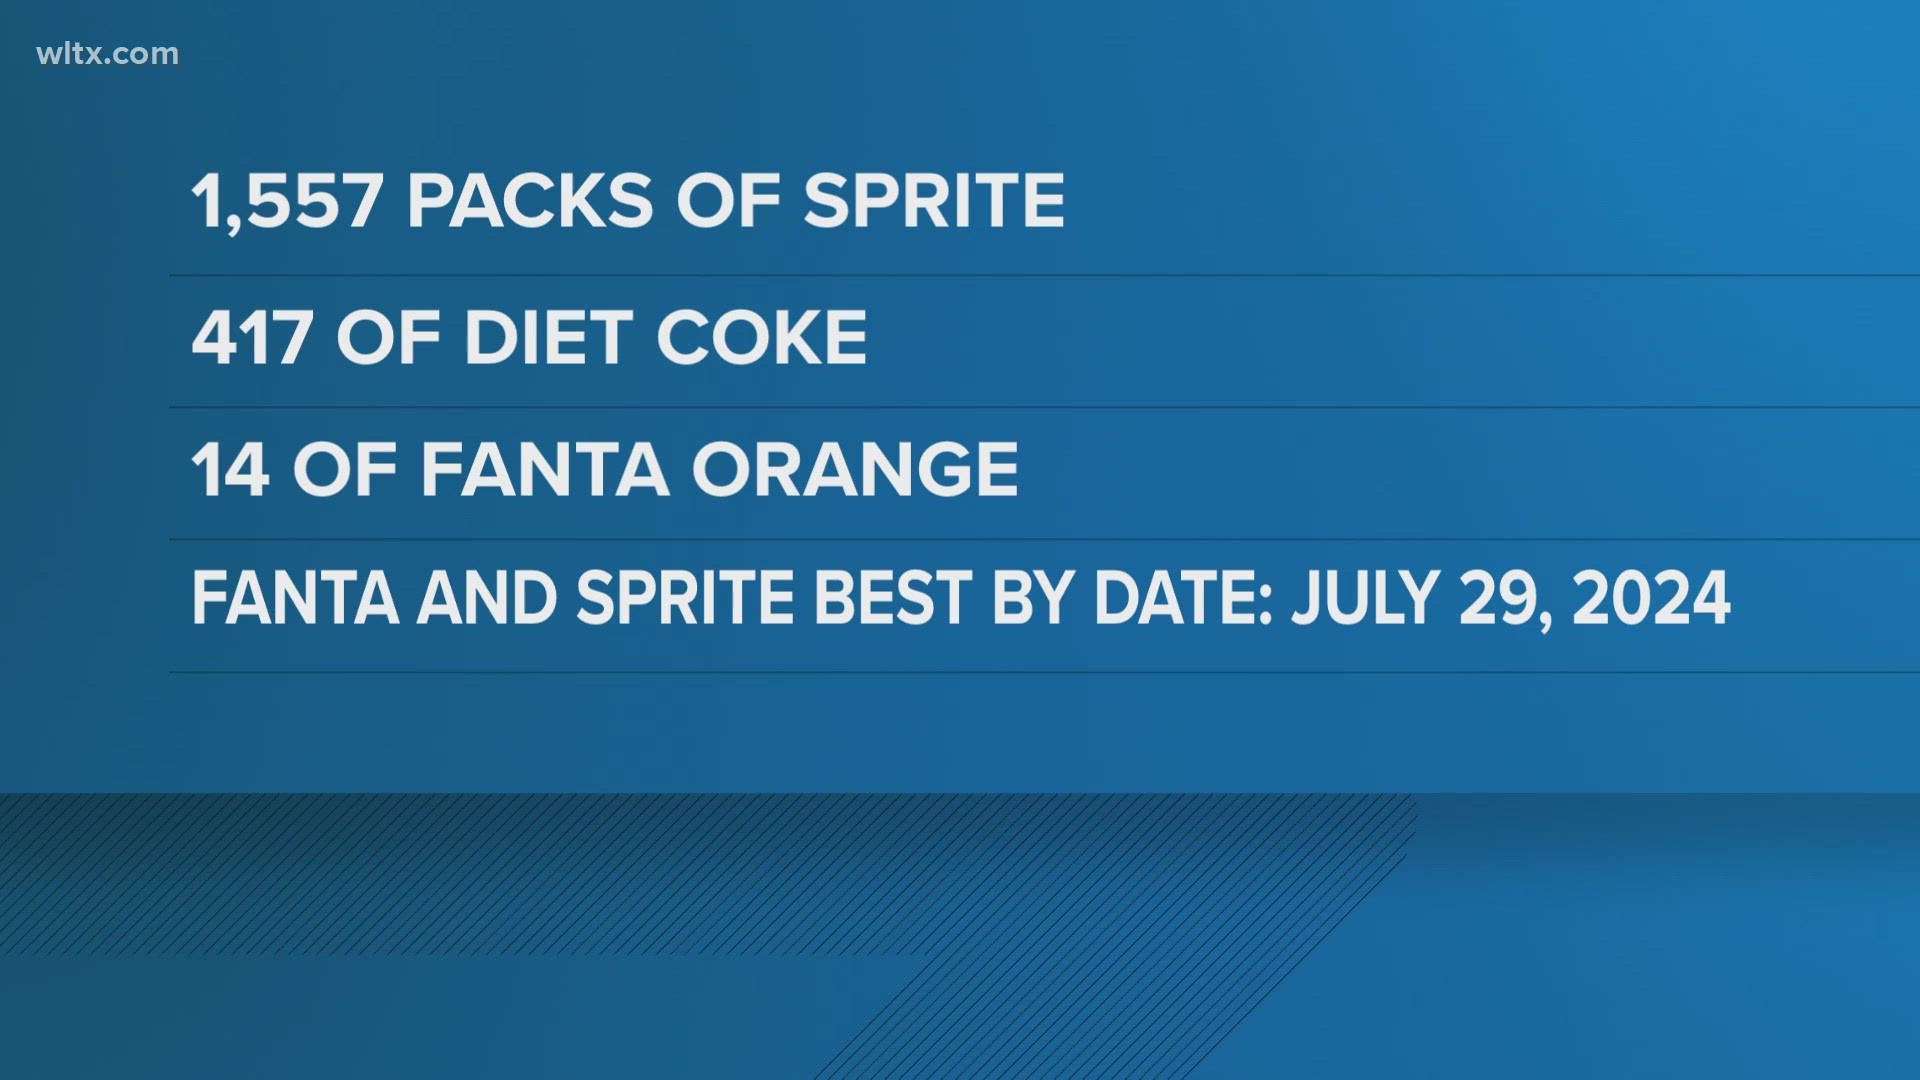 CocaCola recalls more than 2,000 cases of soda